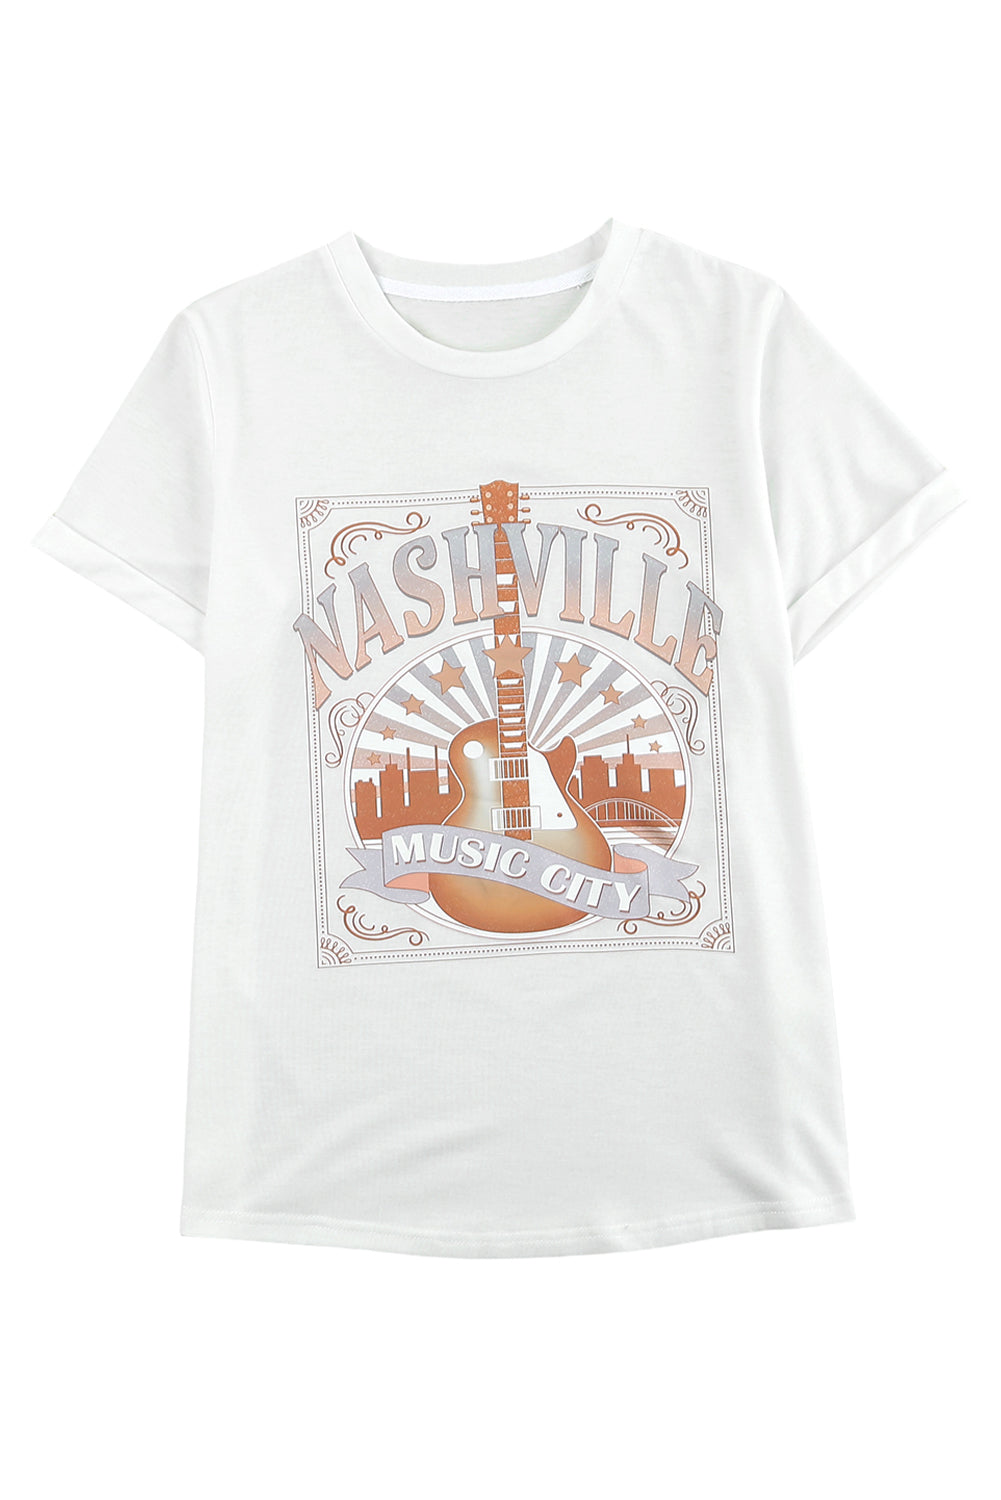 White MUSIC CITY NASHVILLE Graphic T Shirt